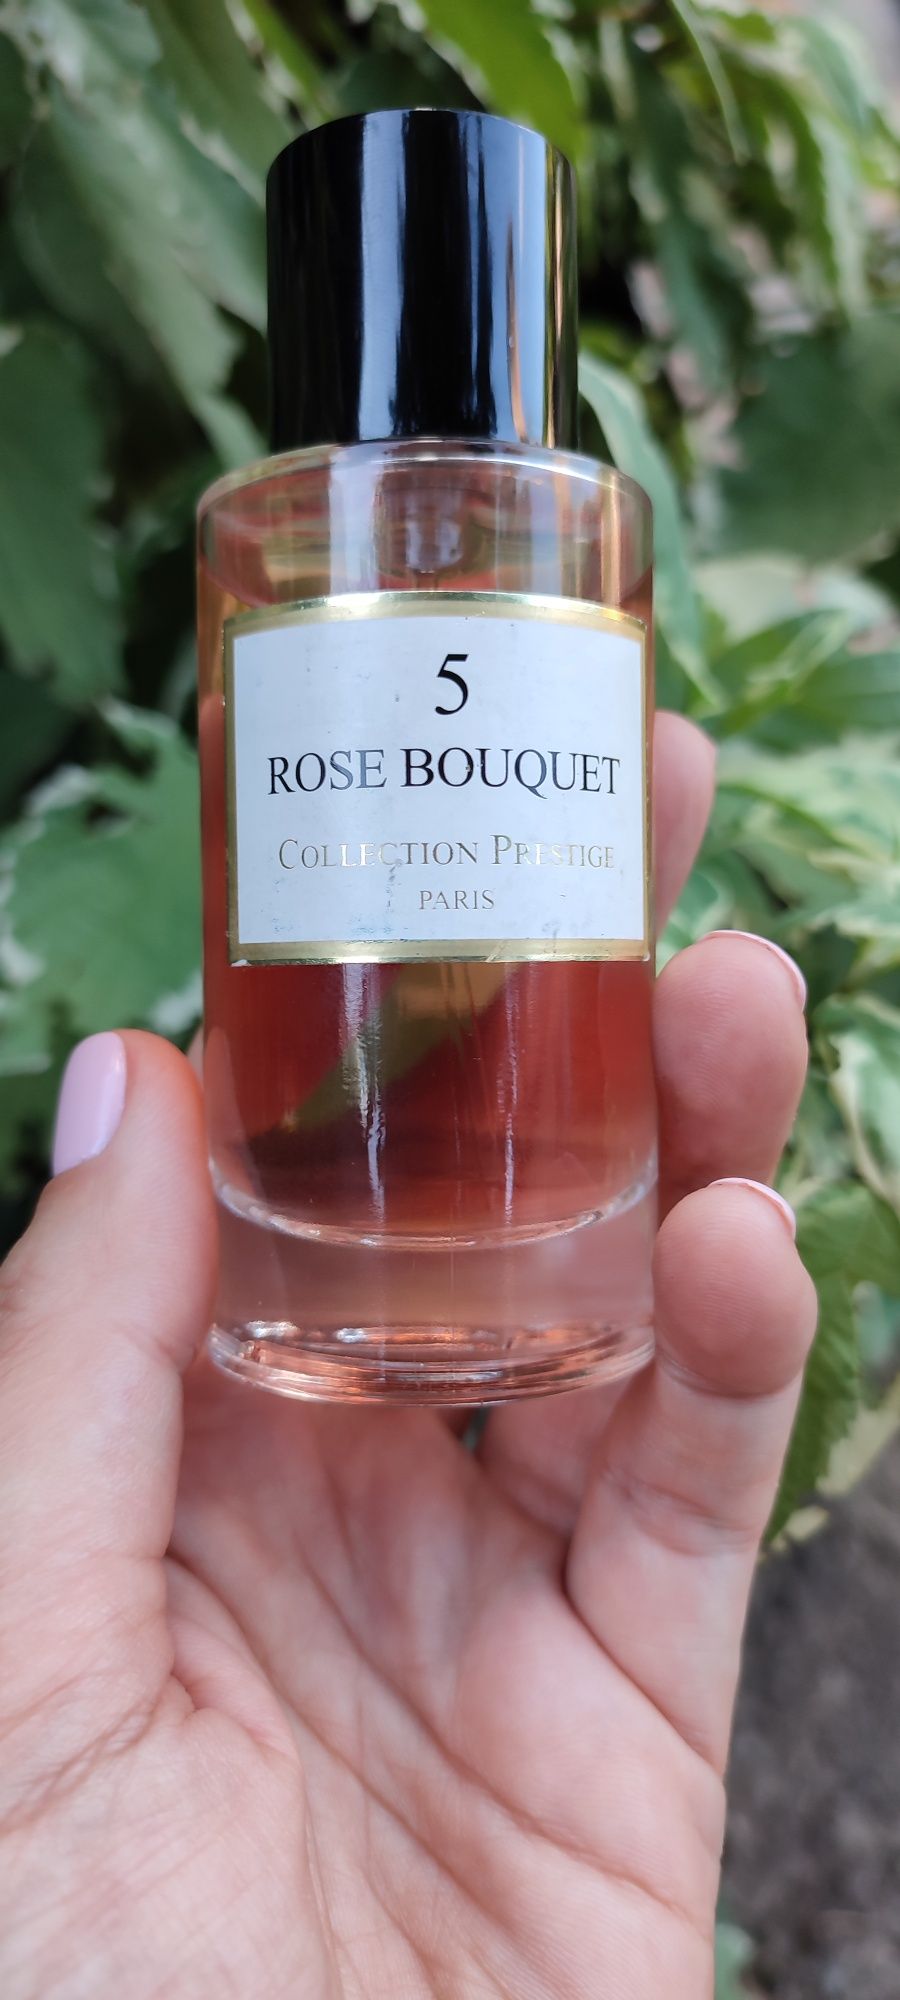 Парфюм Rose Bouquet 5 (Colection prestige) Франция